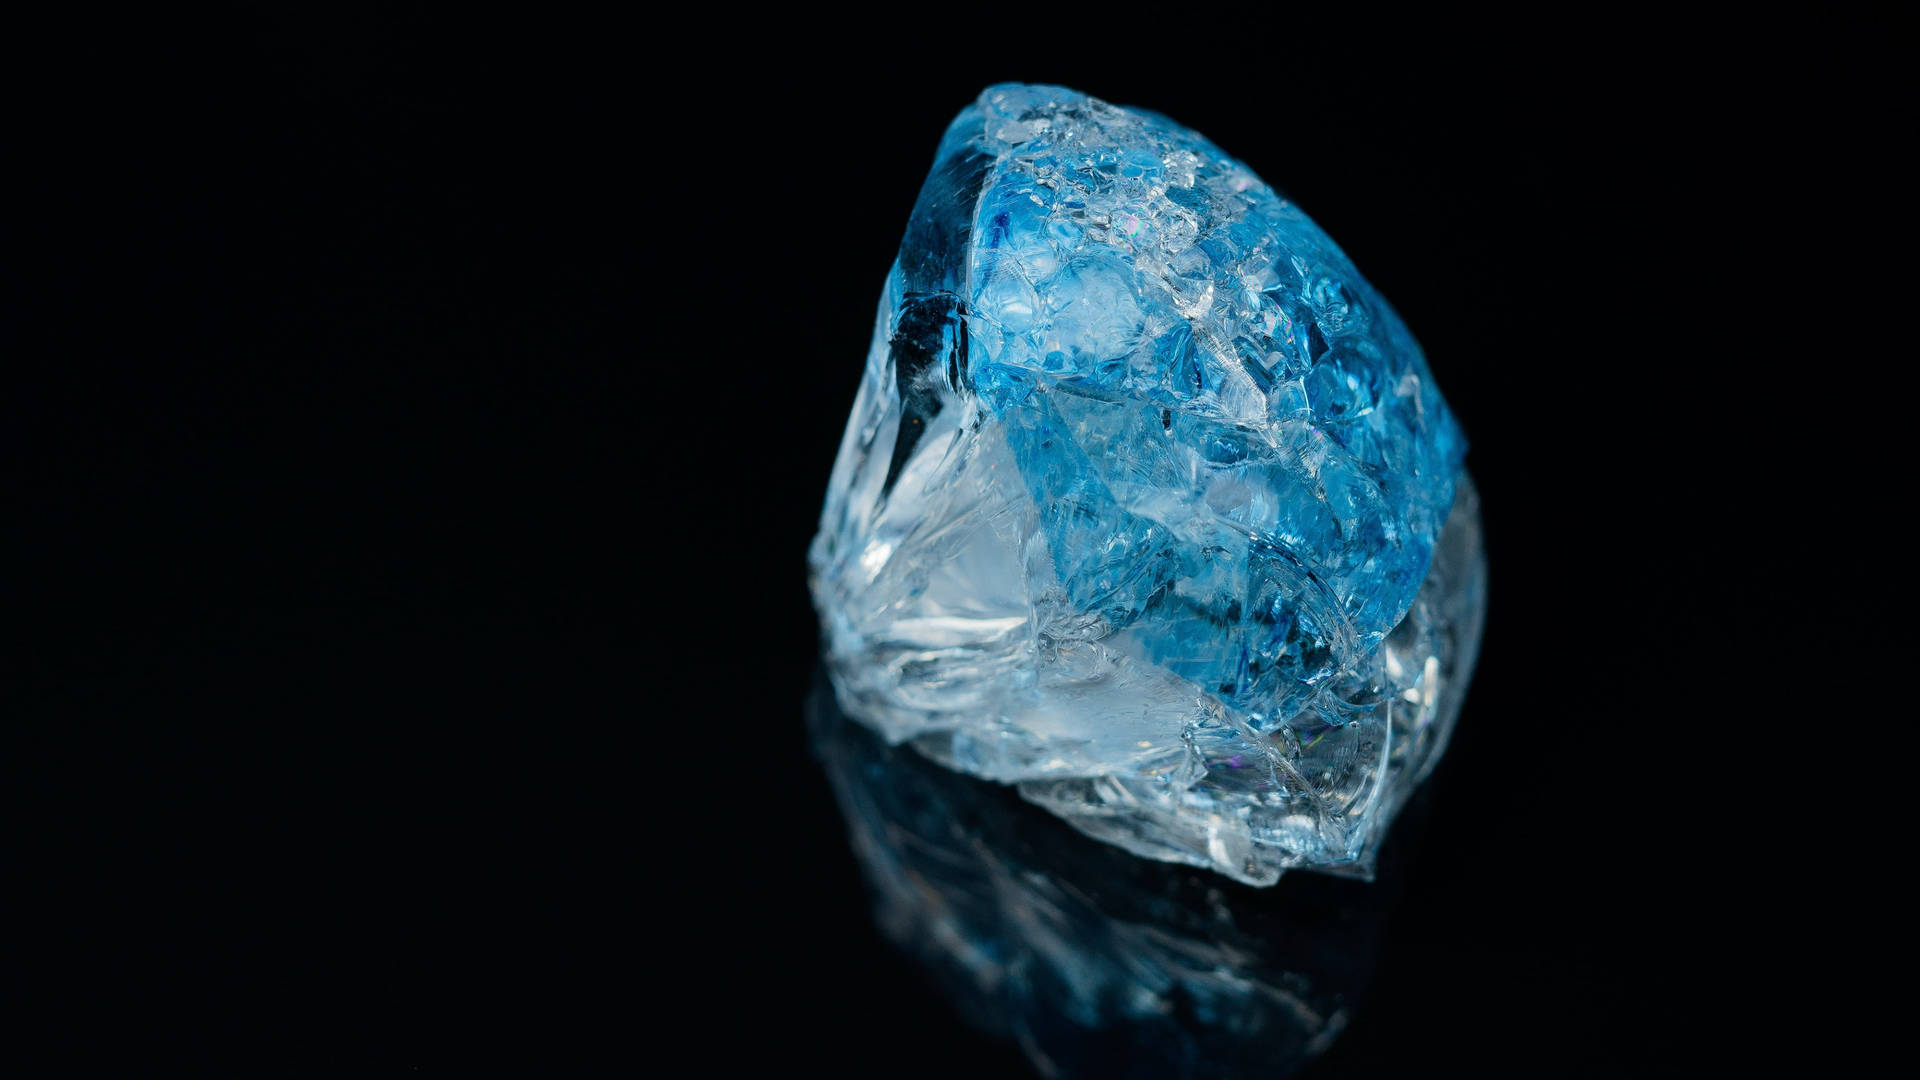 Light Blue Diamond